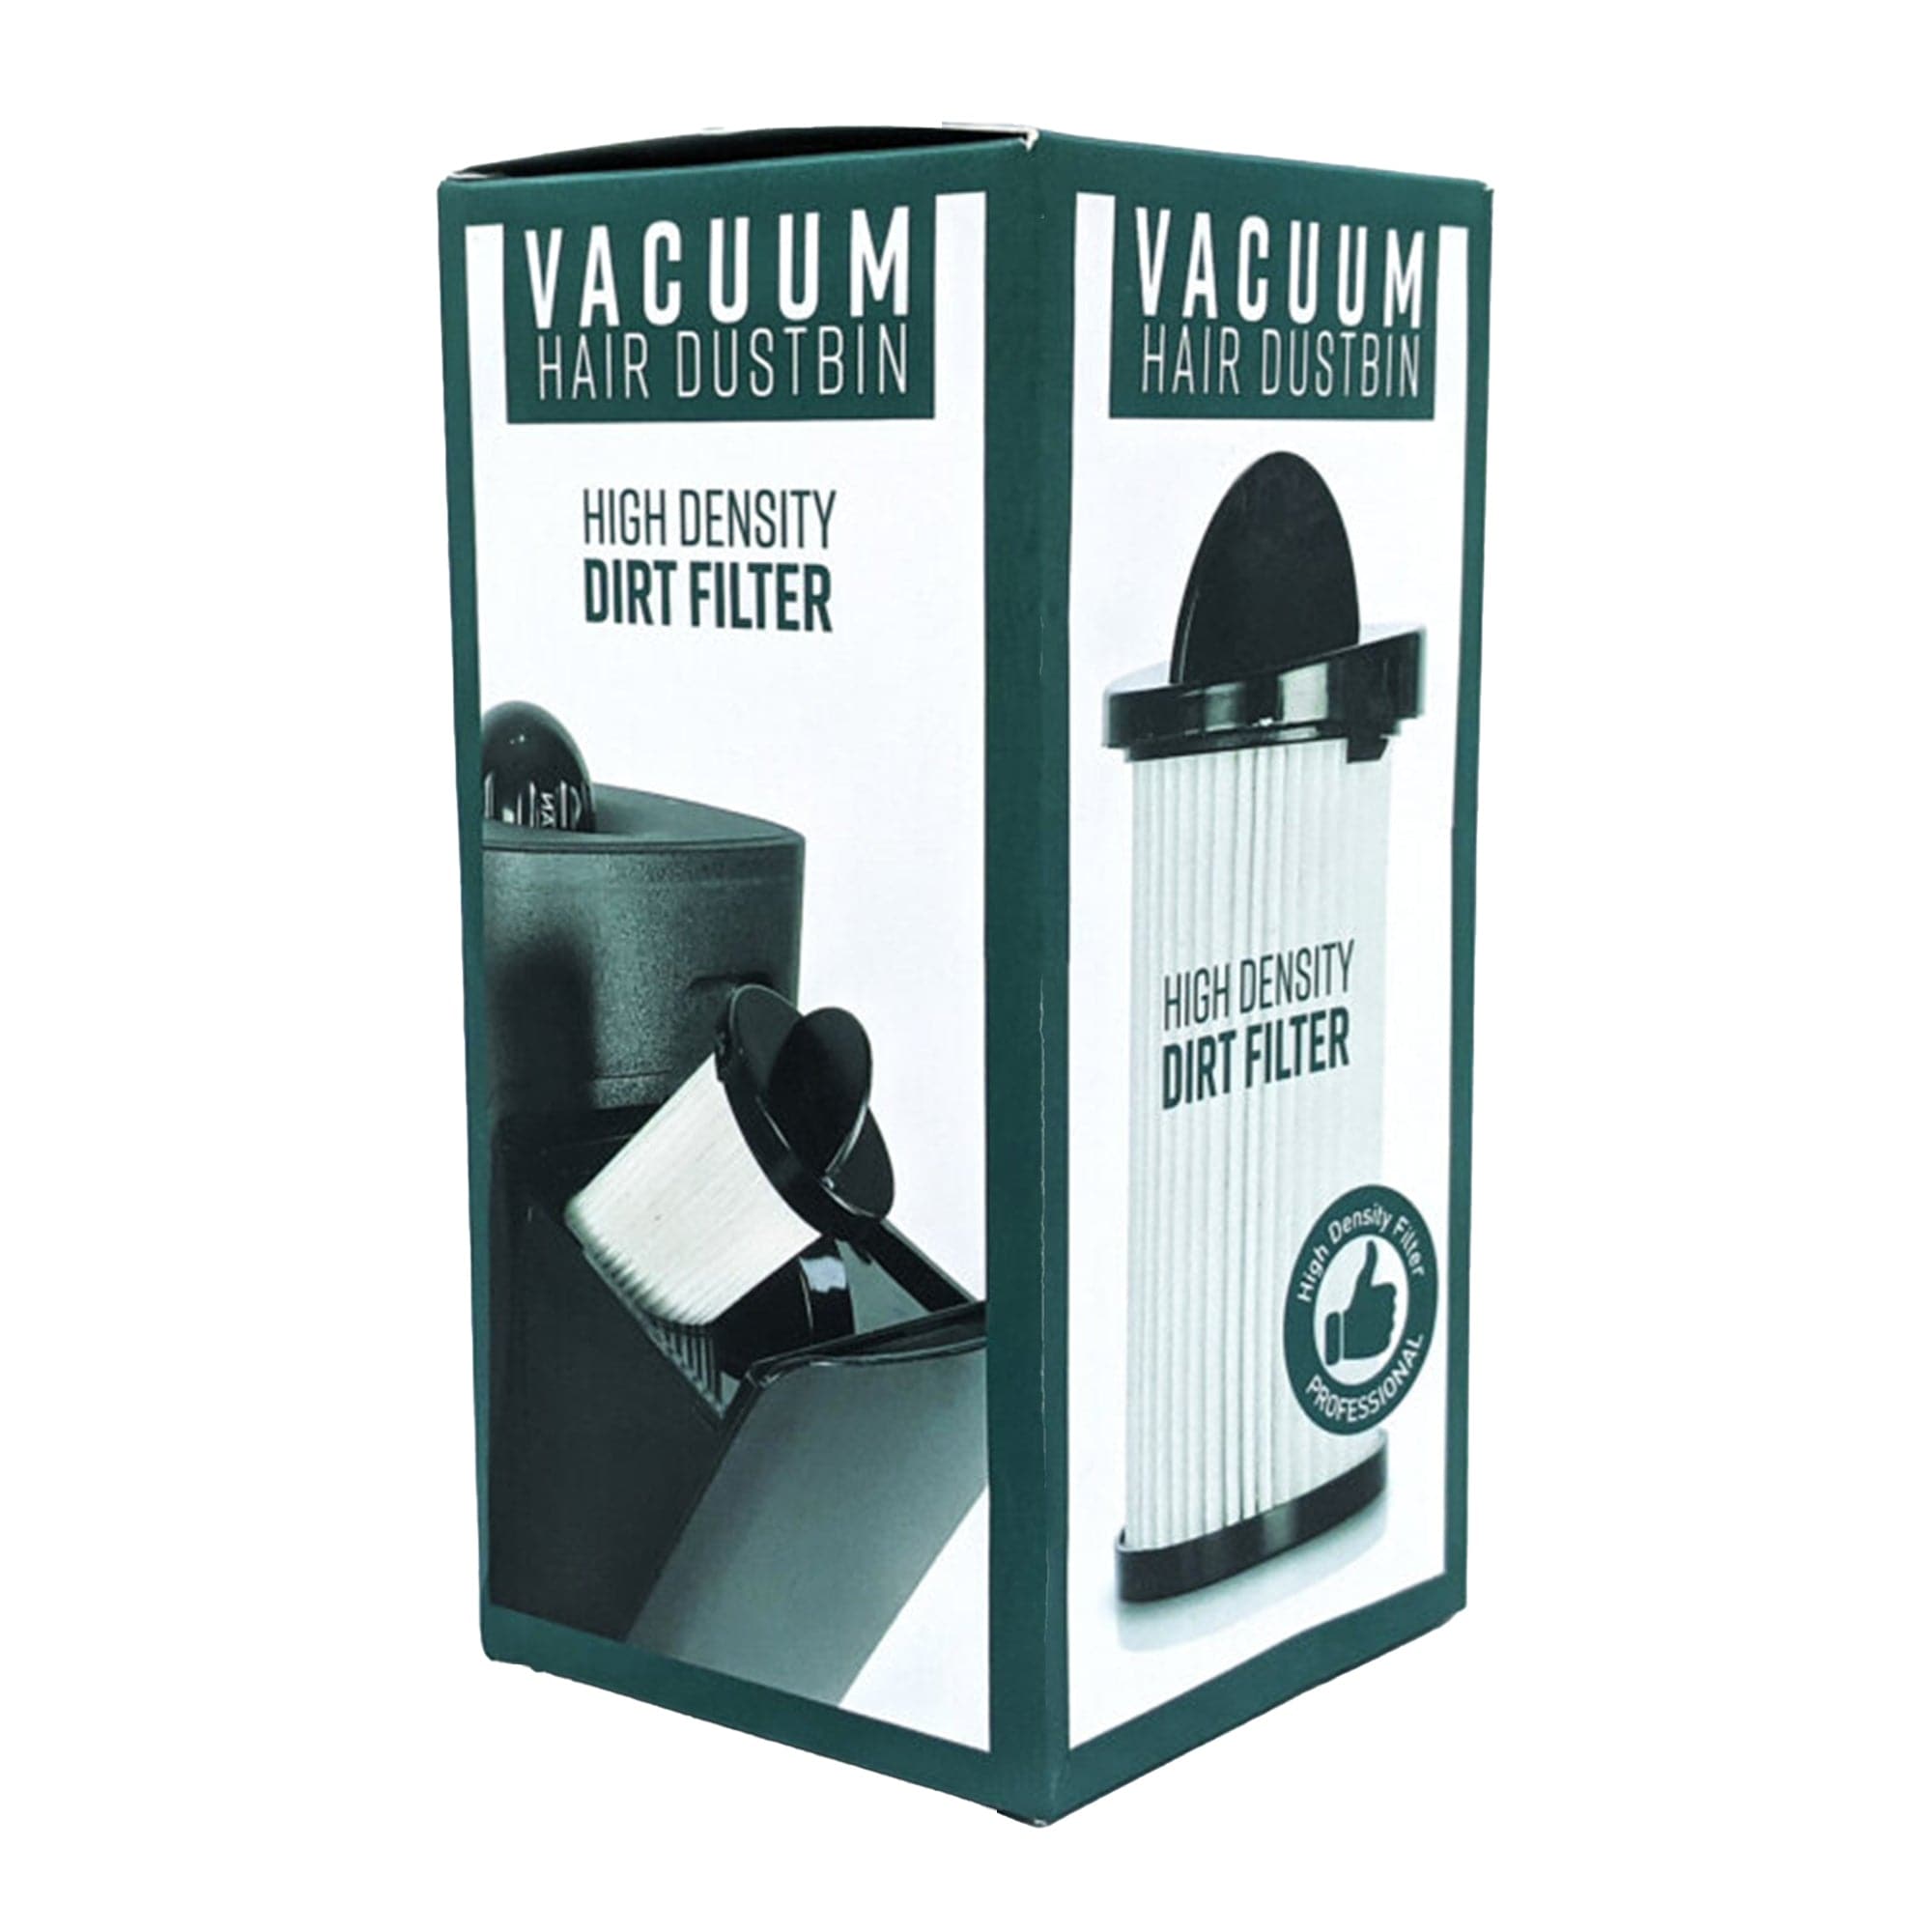 Stylance - Vacuum Hair Dustbin High Density Dirt Filter